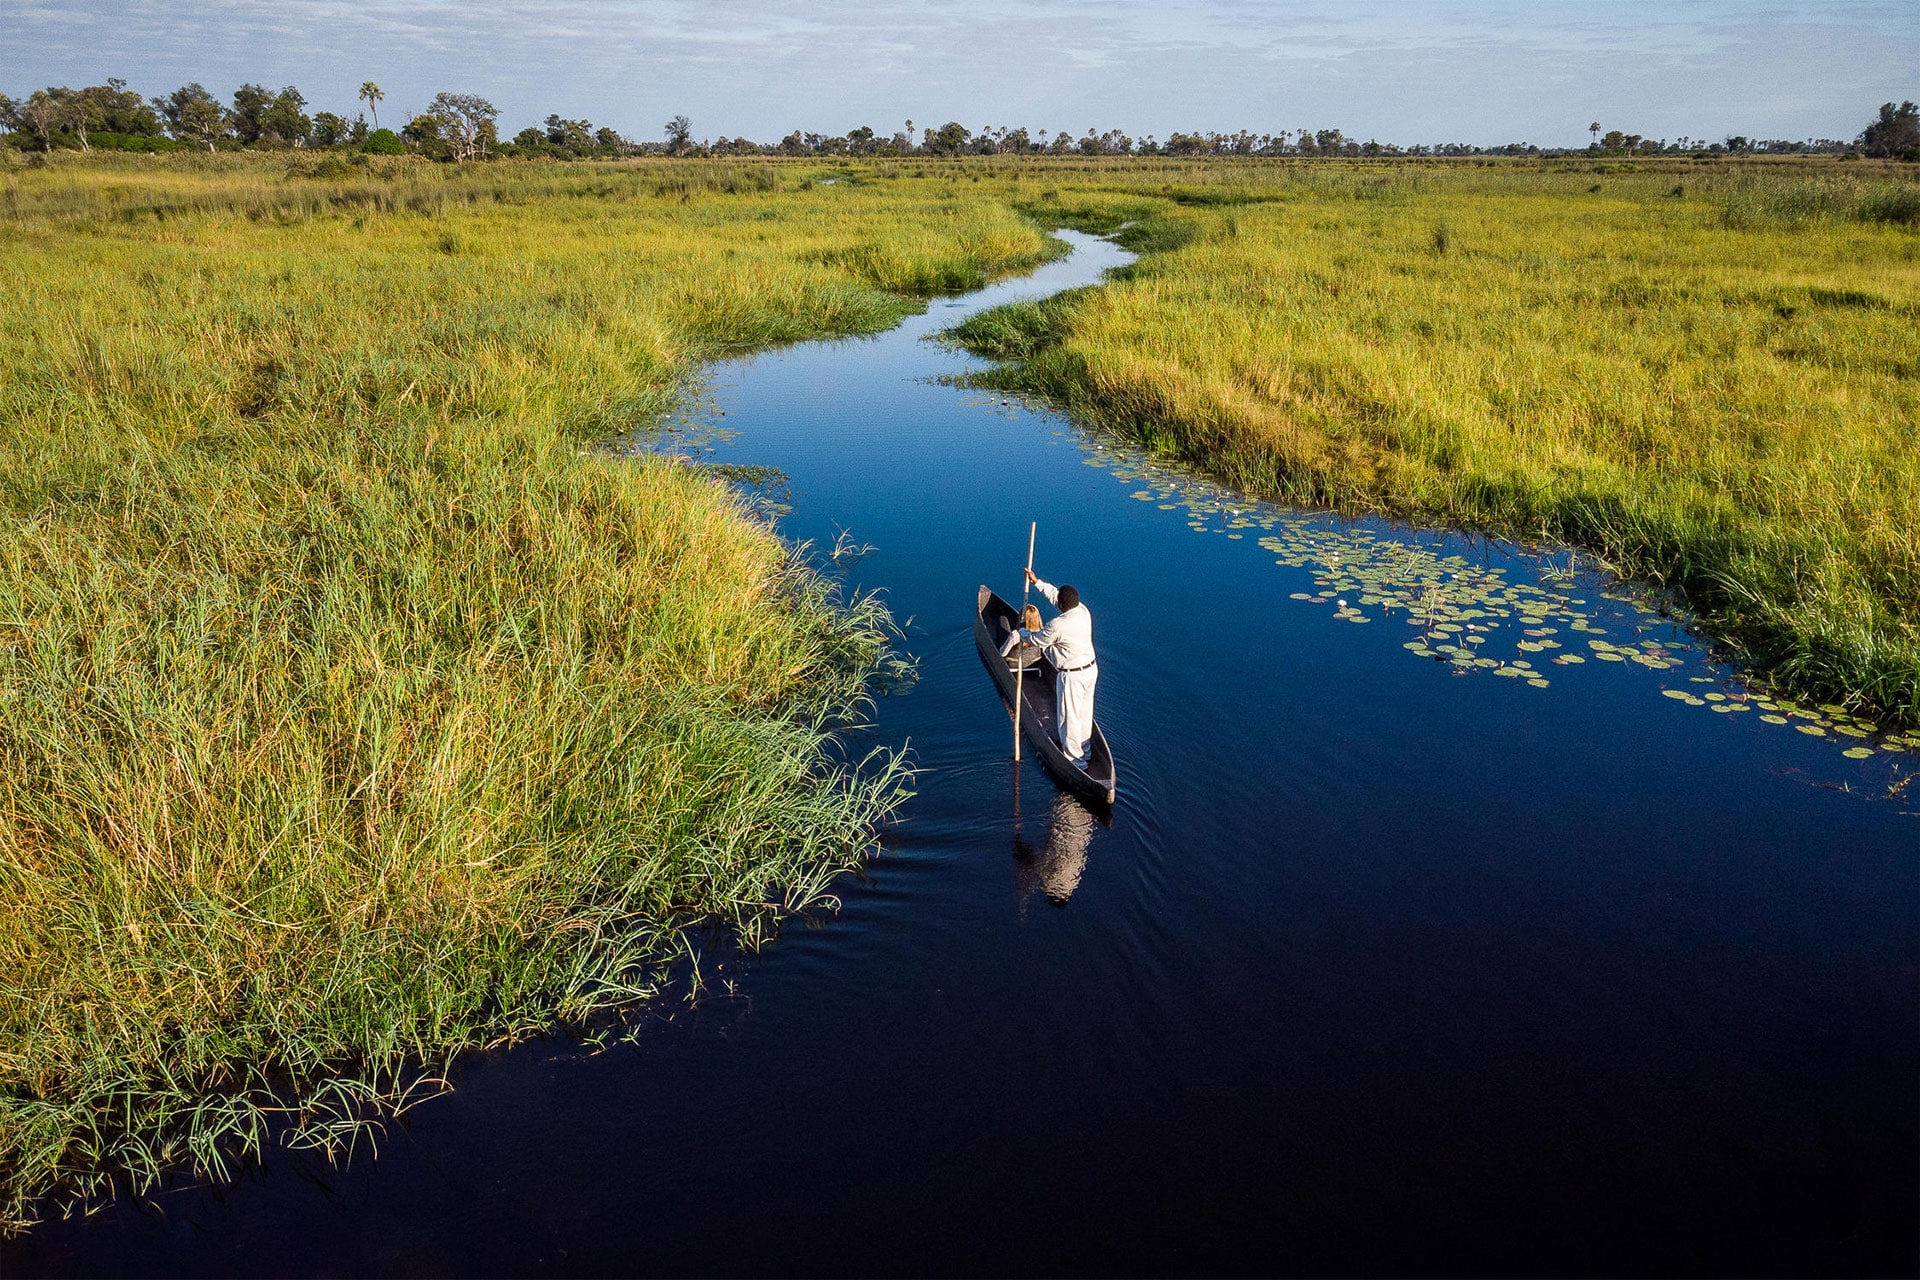 A mokoro canoe on the water at the Okavango Delta